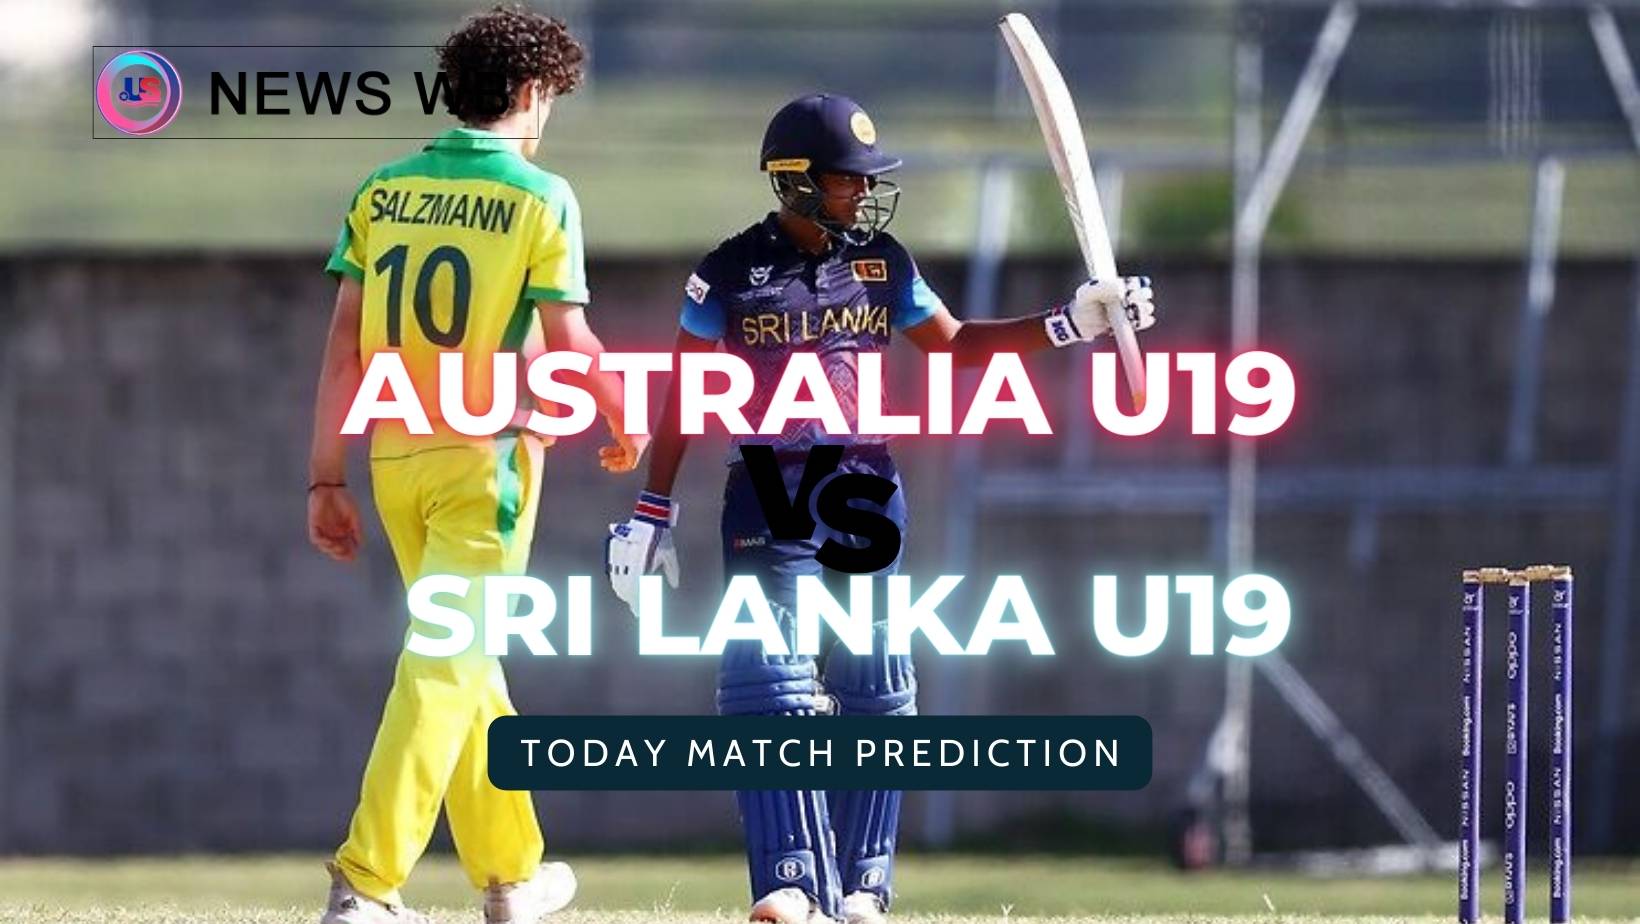 Today Match Prediction: AUS U19 vs SL U19 Dream11 Team, Australia U19 vs Sri Lanka U19 24th Match, Group C, Who Will Win?